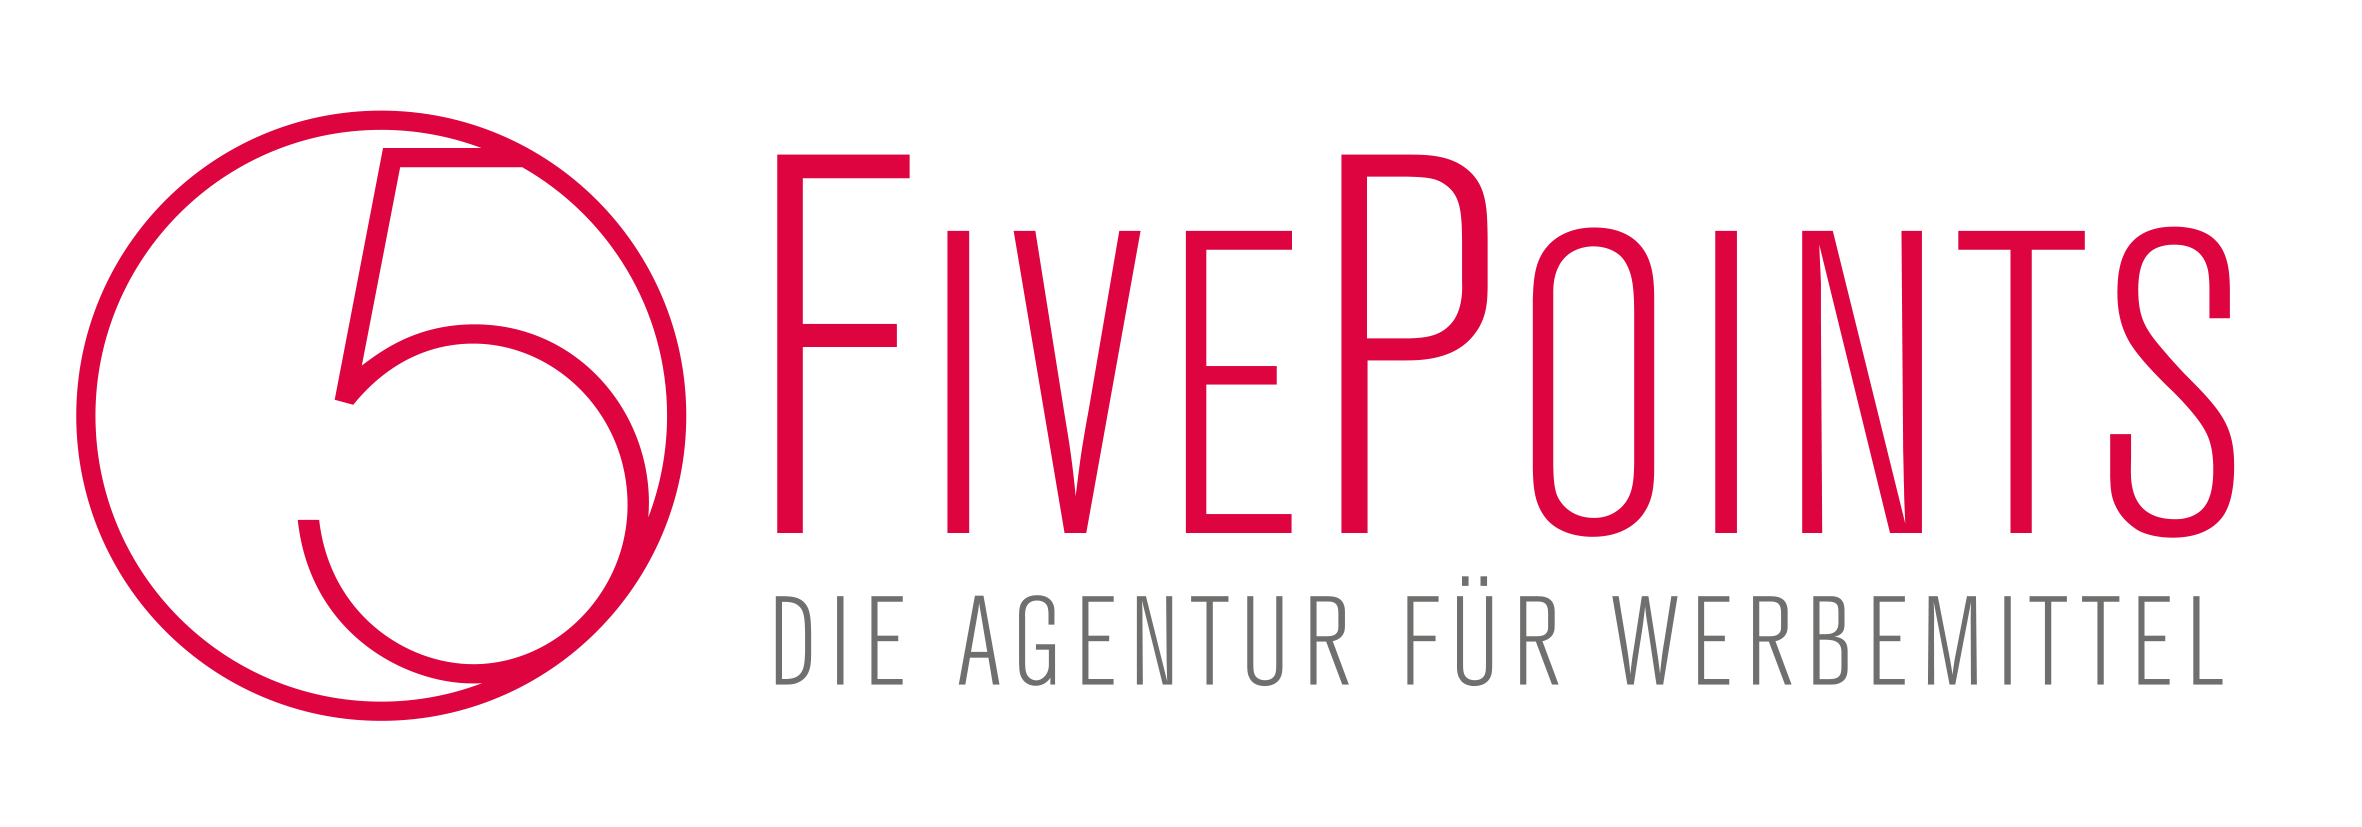 Fivepoints, Fivepointspromotion, Werbemittel, Werbeartikel, Katalog